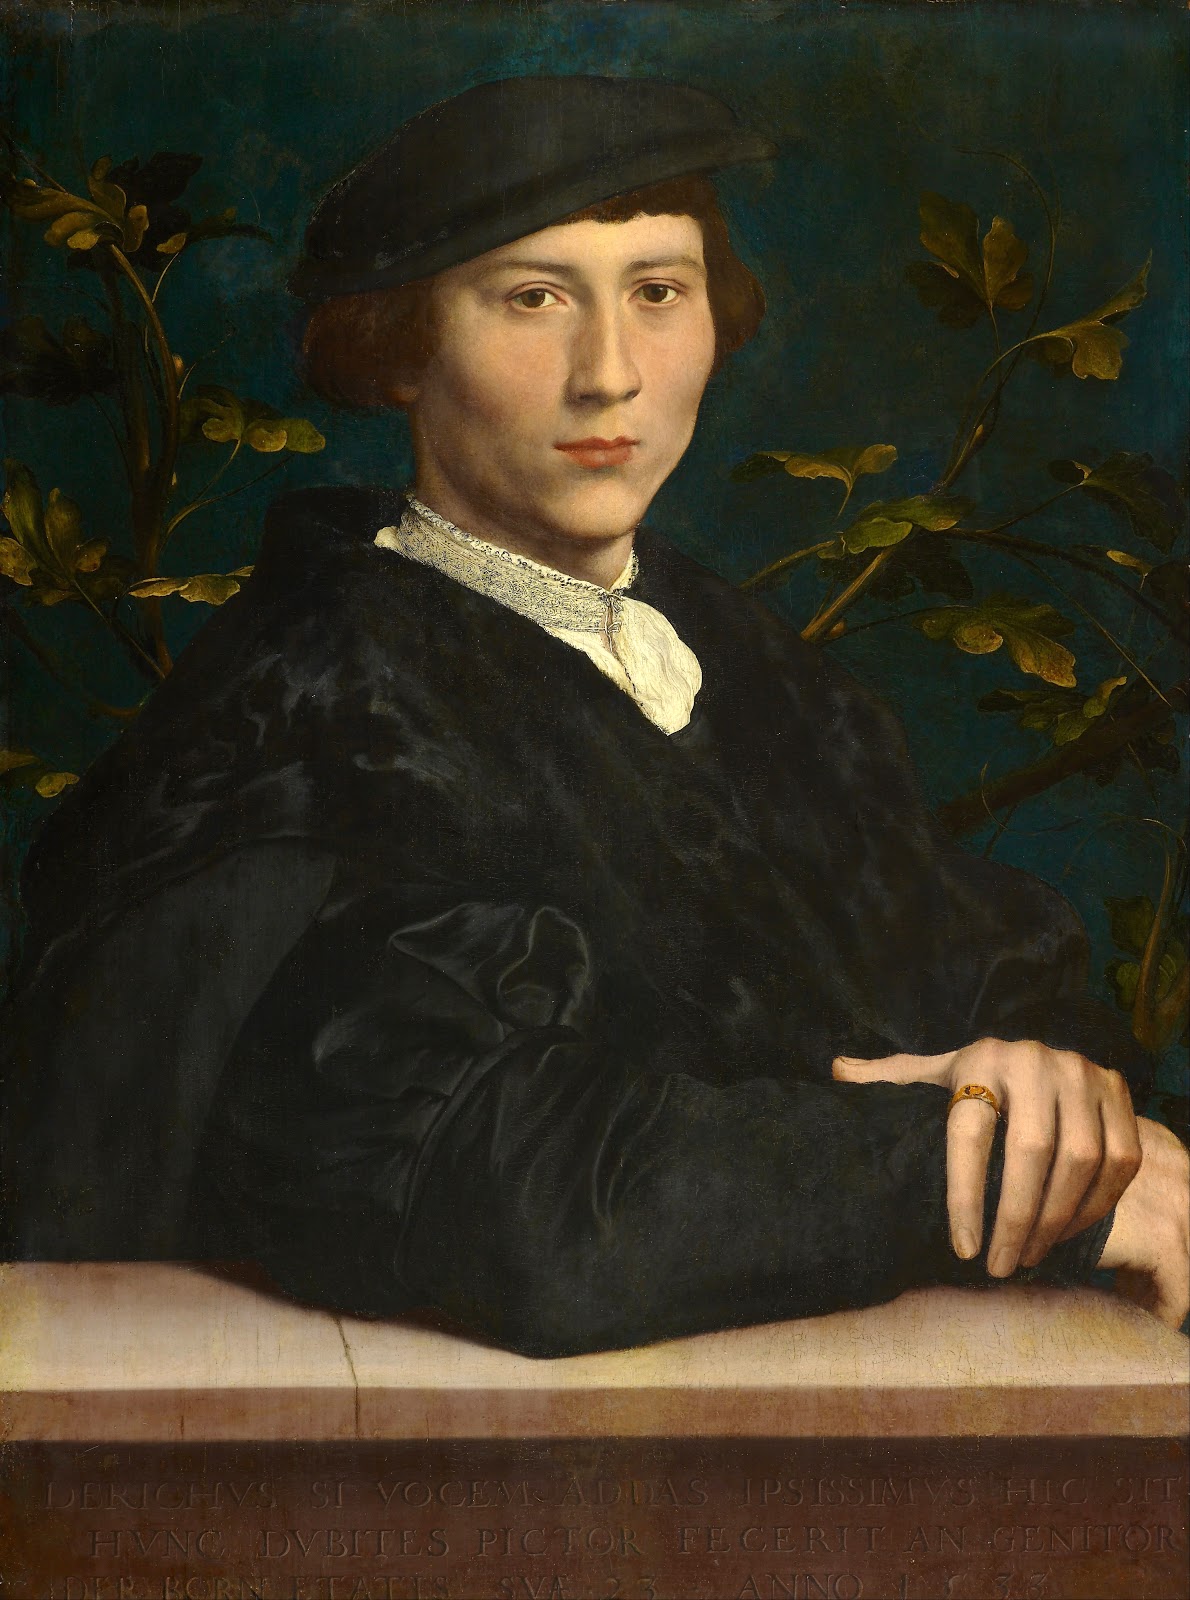 Hans+Holbein (15).jpg